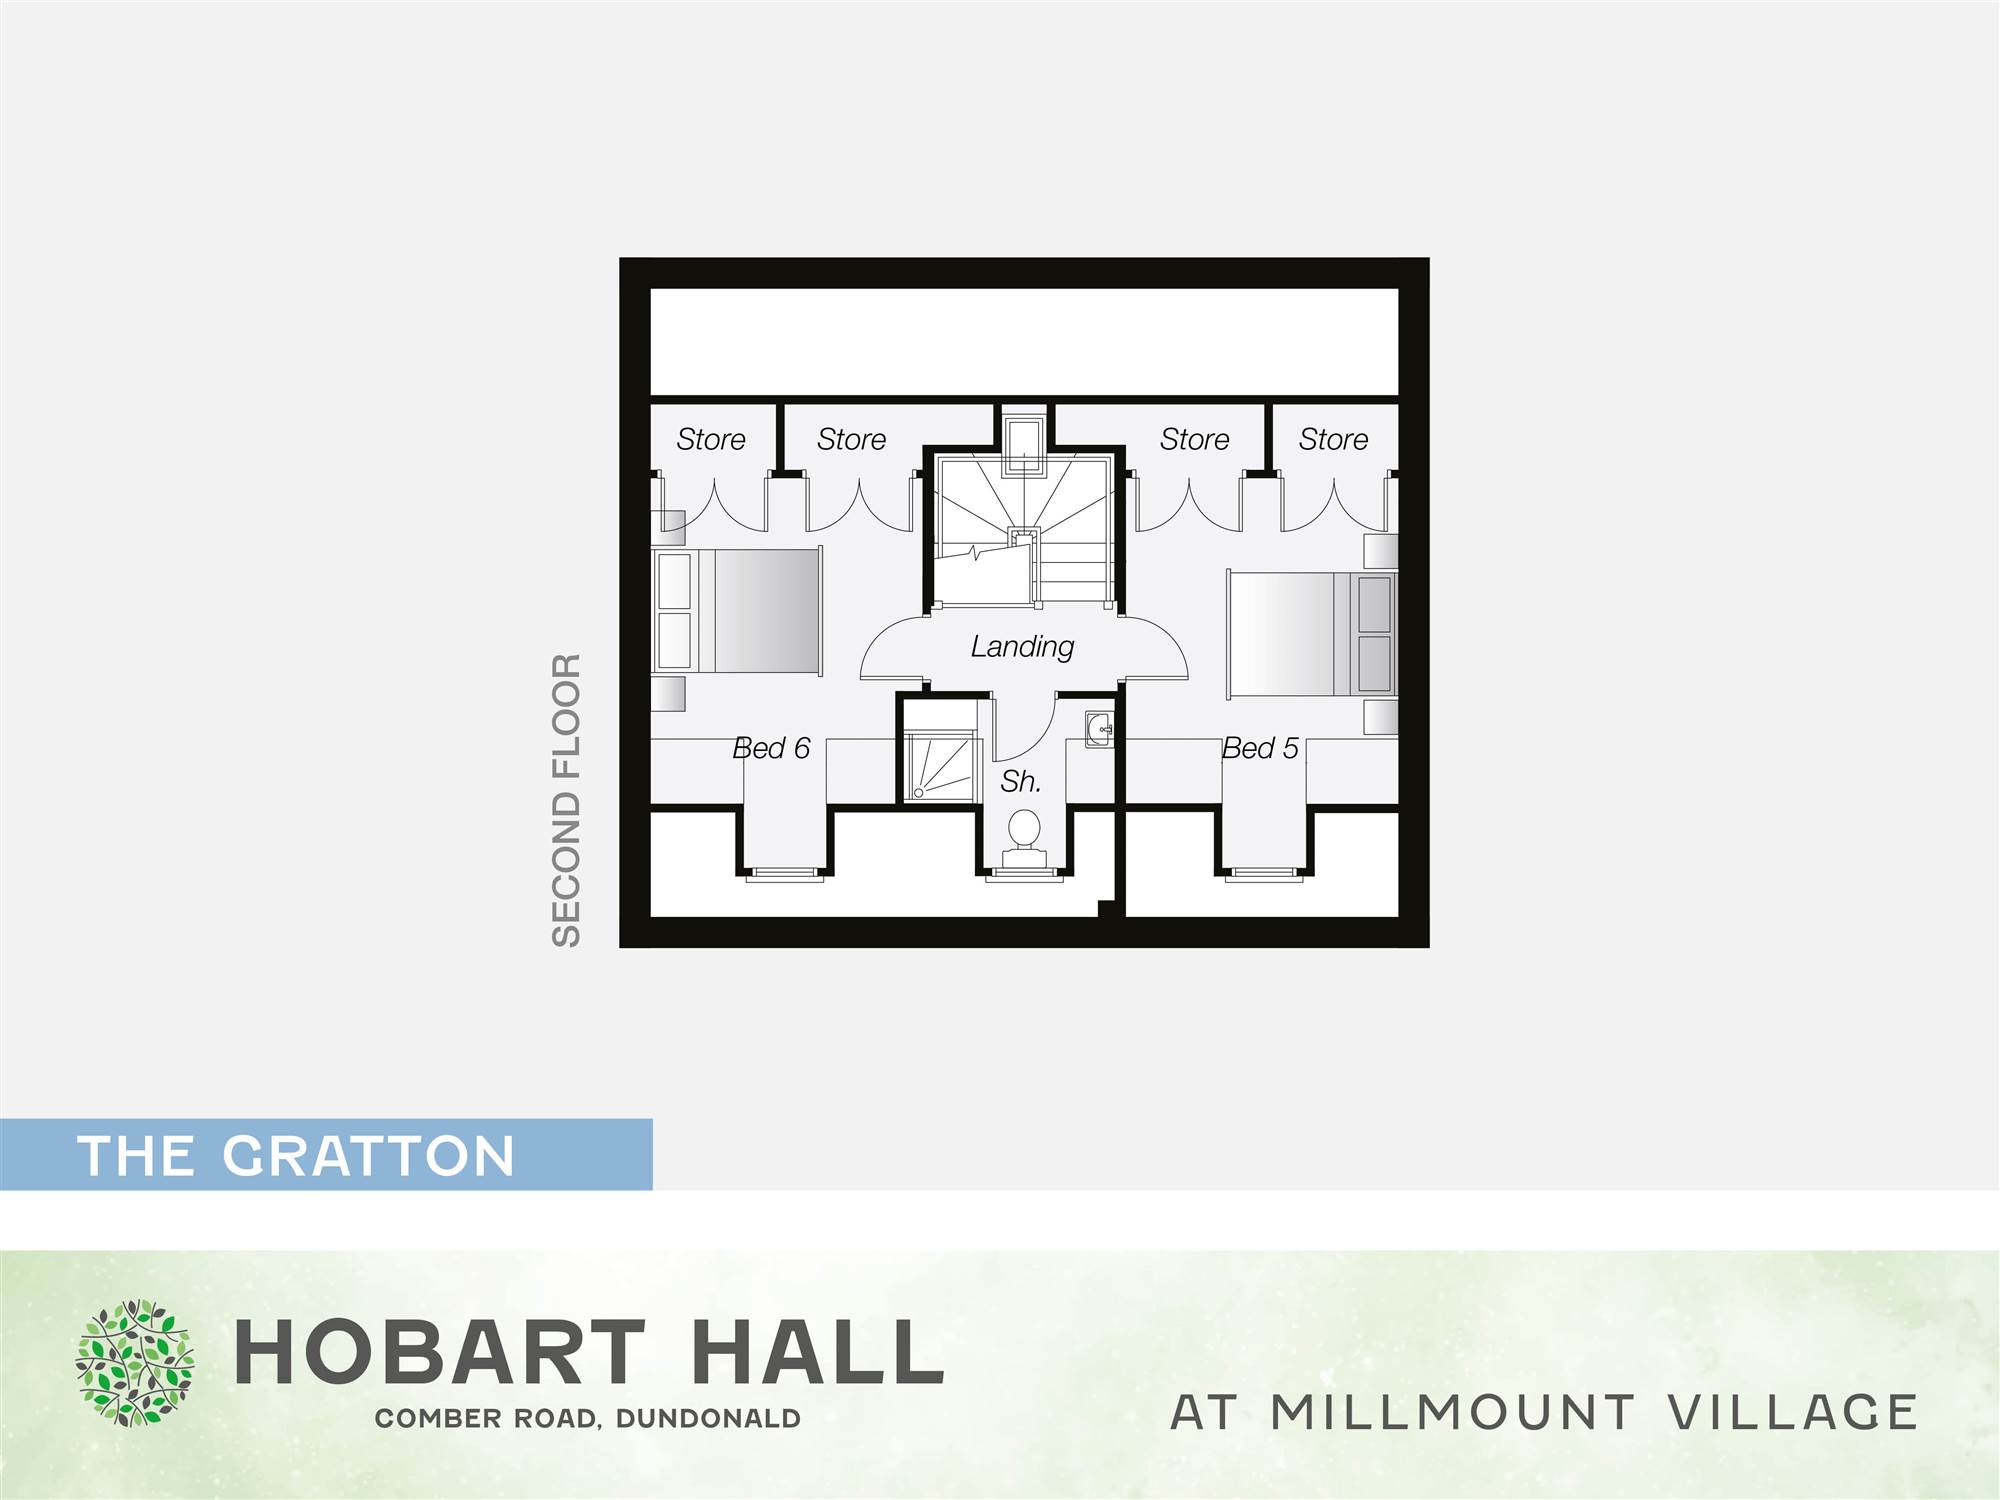 Site 38 Hobart Hall at Millmount Village